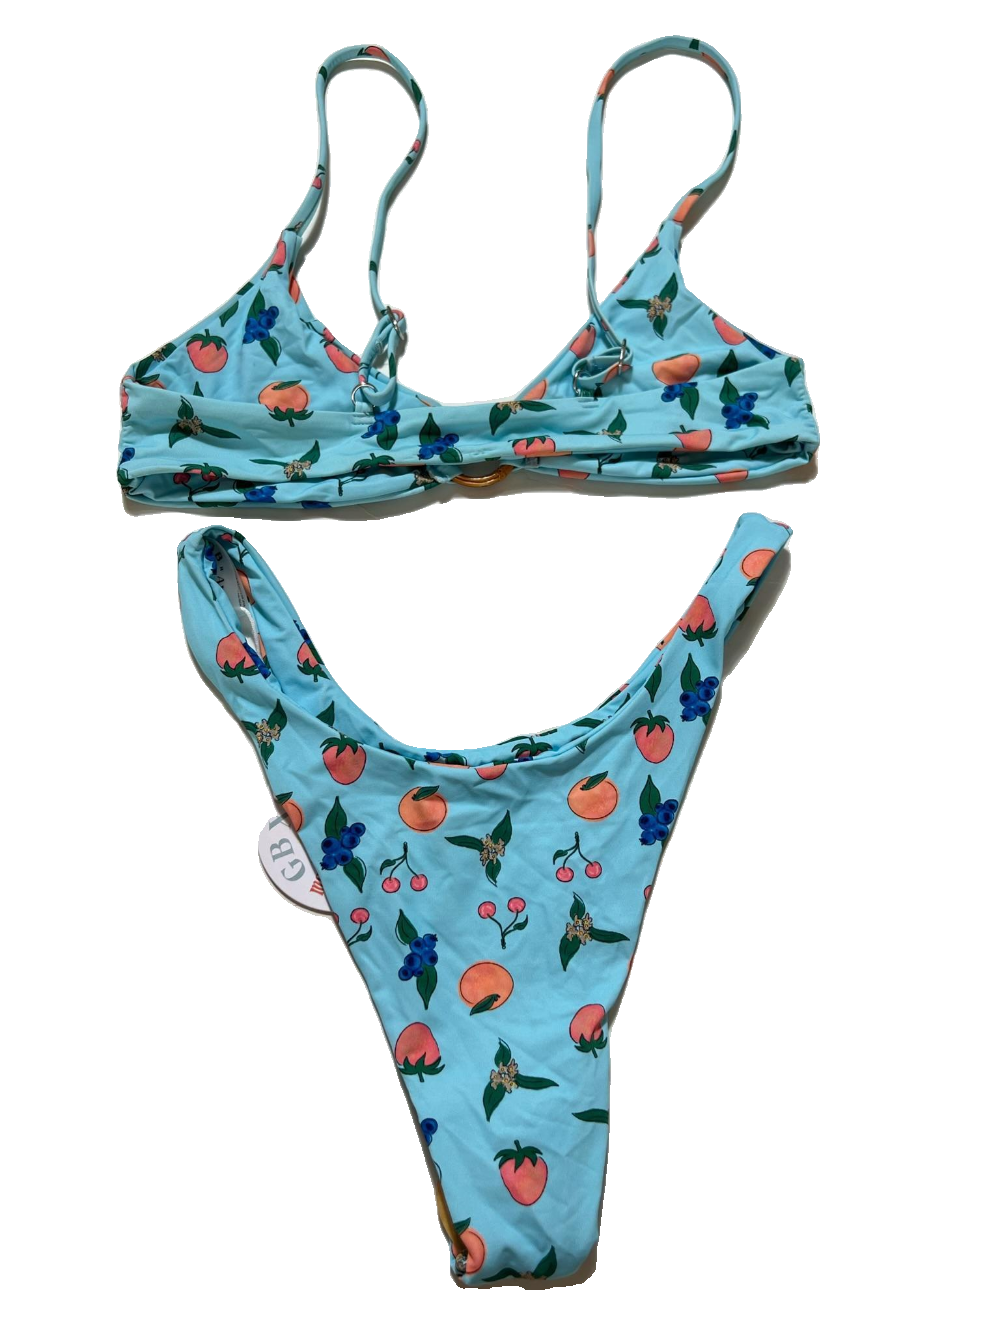 Grey Bandit X ANA- Blue Fruit Cheeky Bottom Bikini NEW WITH TAGS